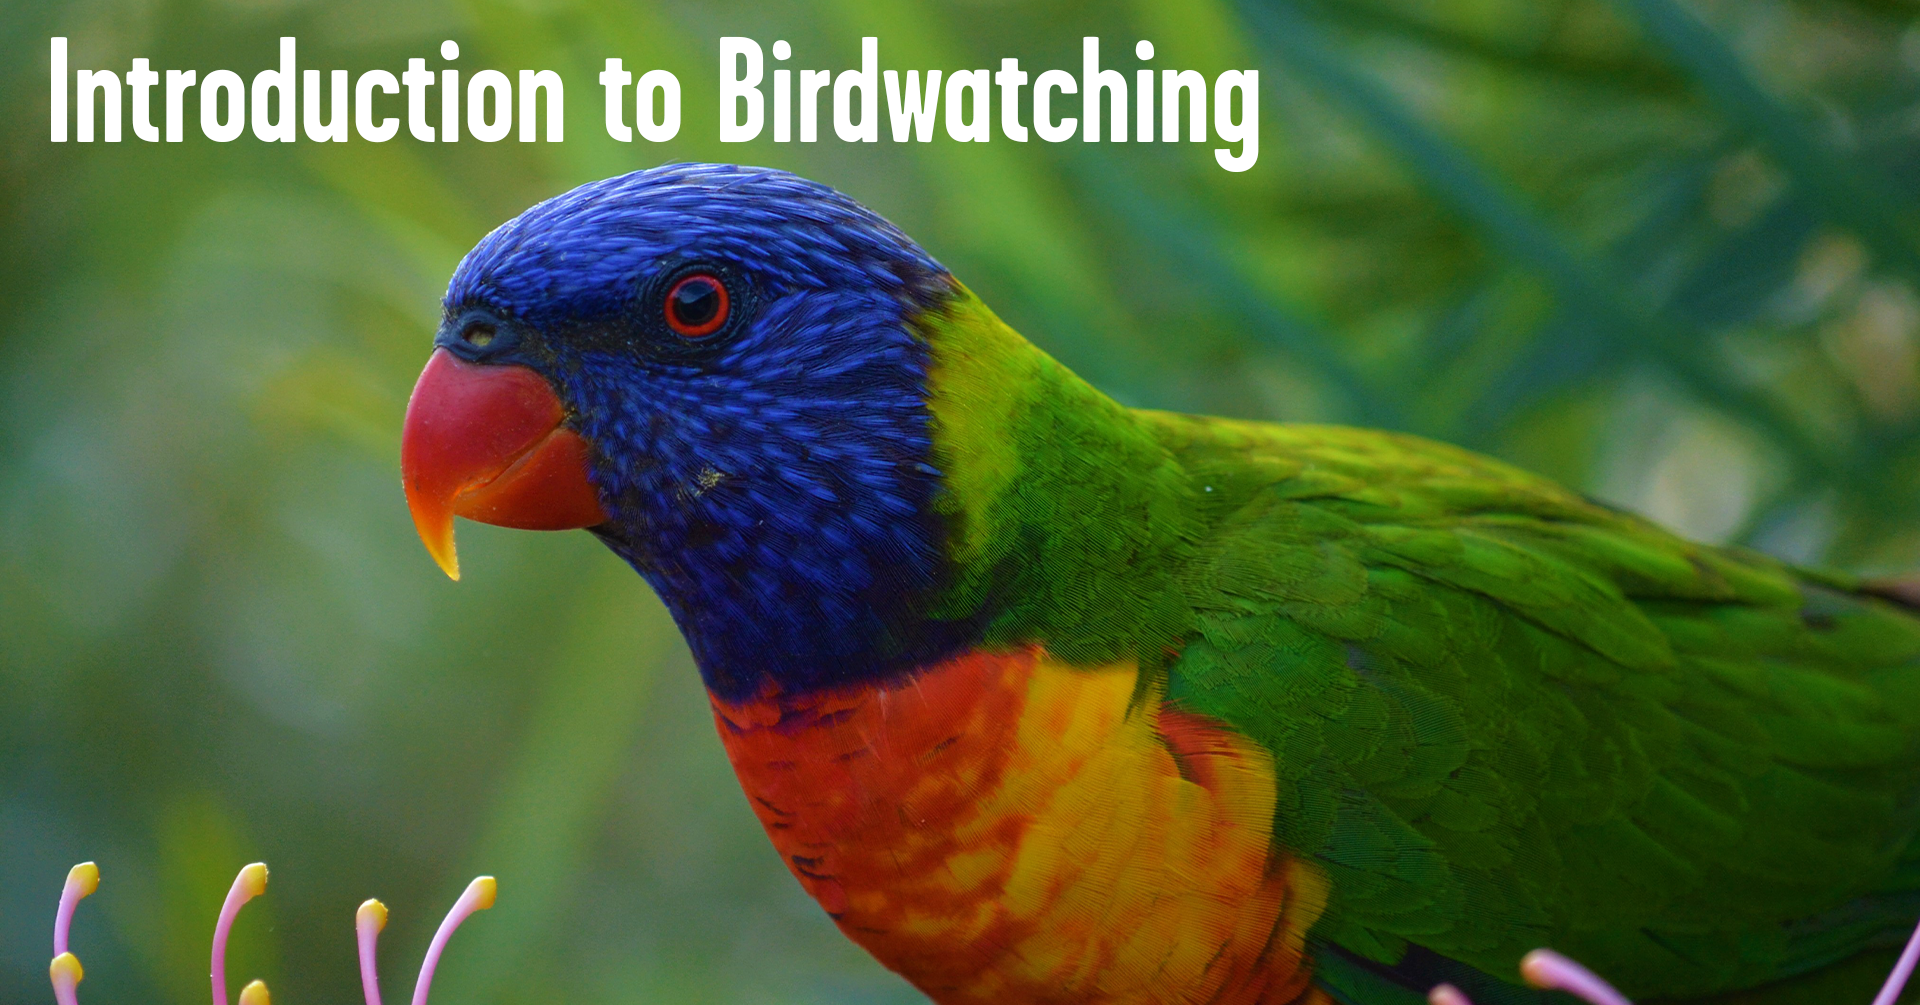 Introduction to Birdwatching Workshop